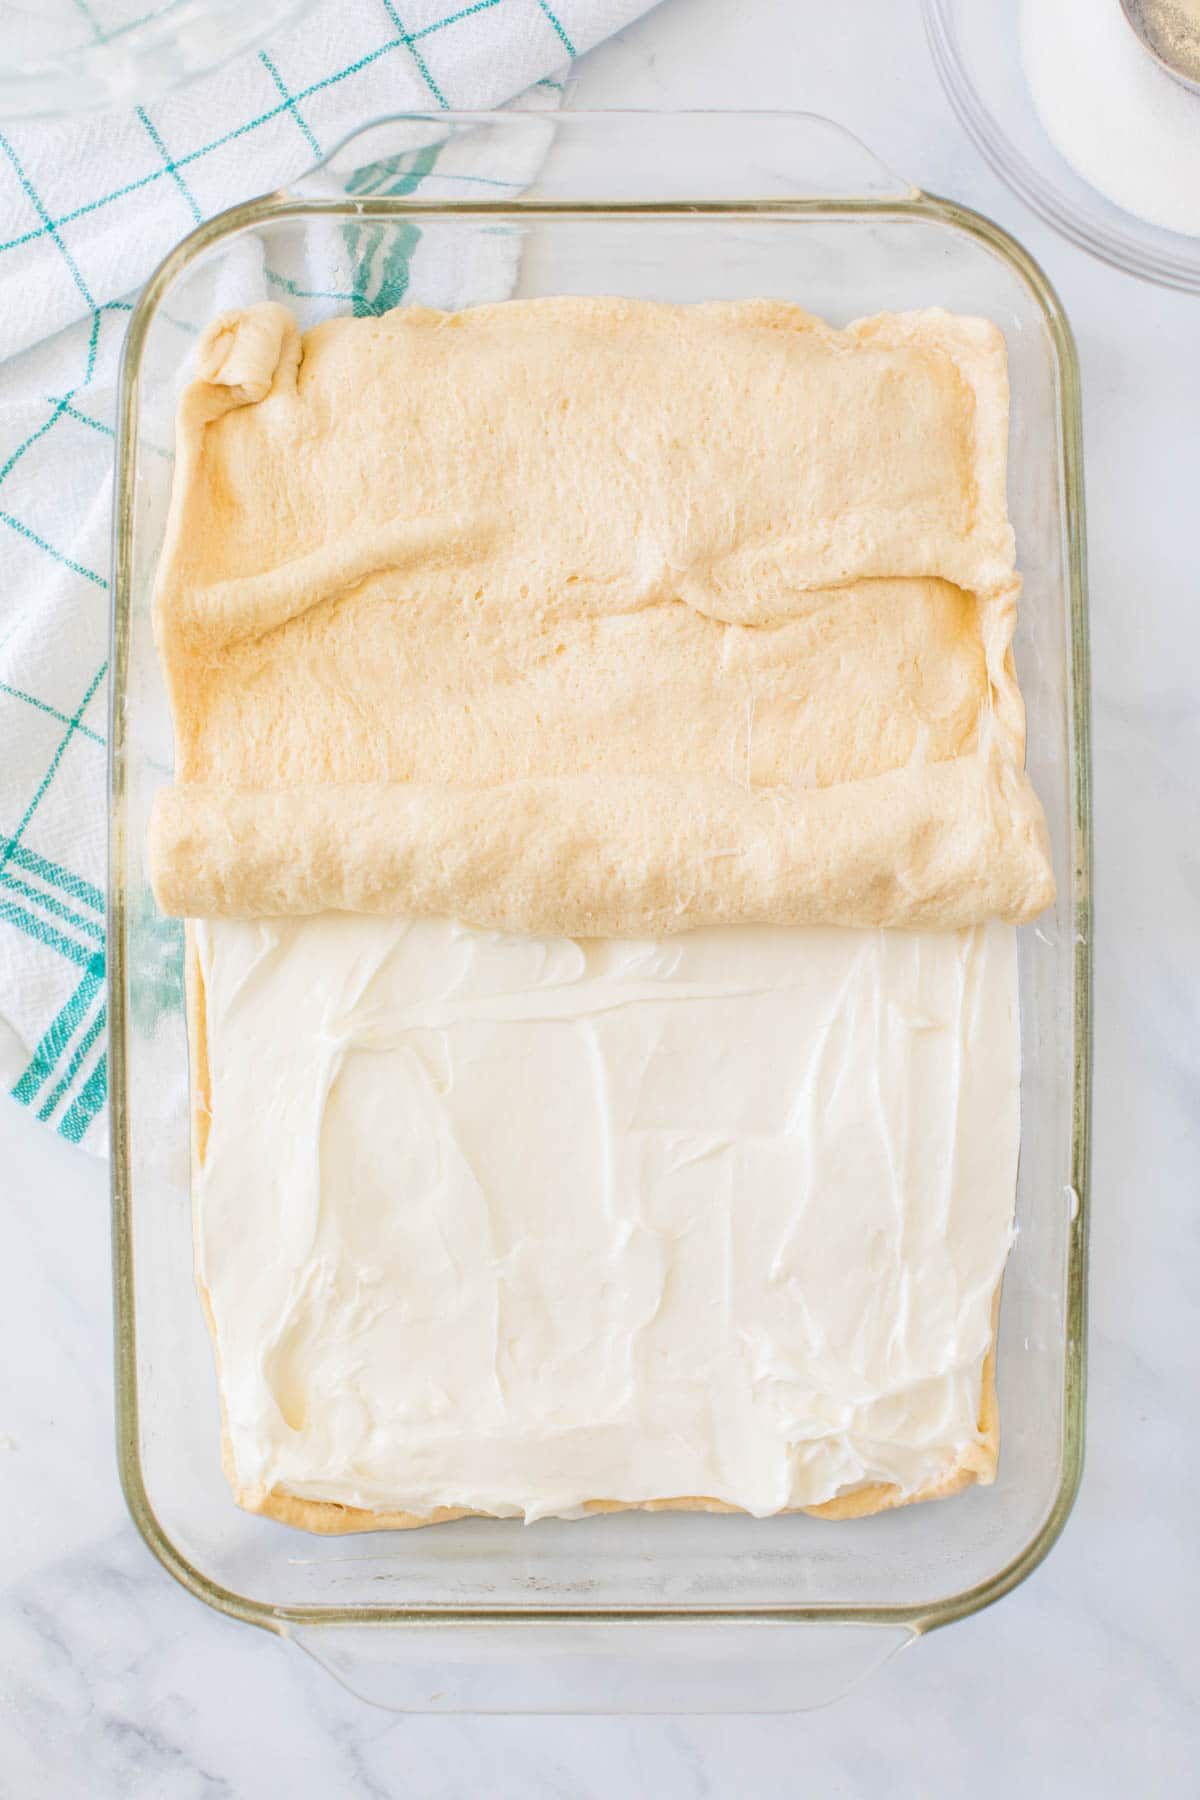 Půlměsíc se pokládá na smetanový sýr v pekáčku